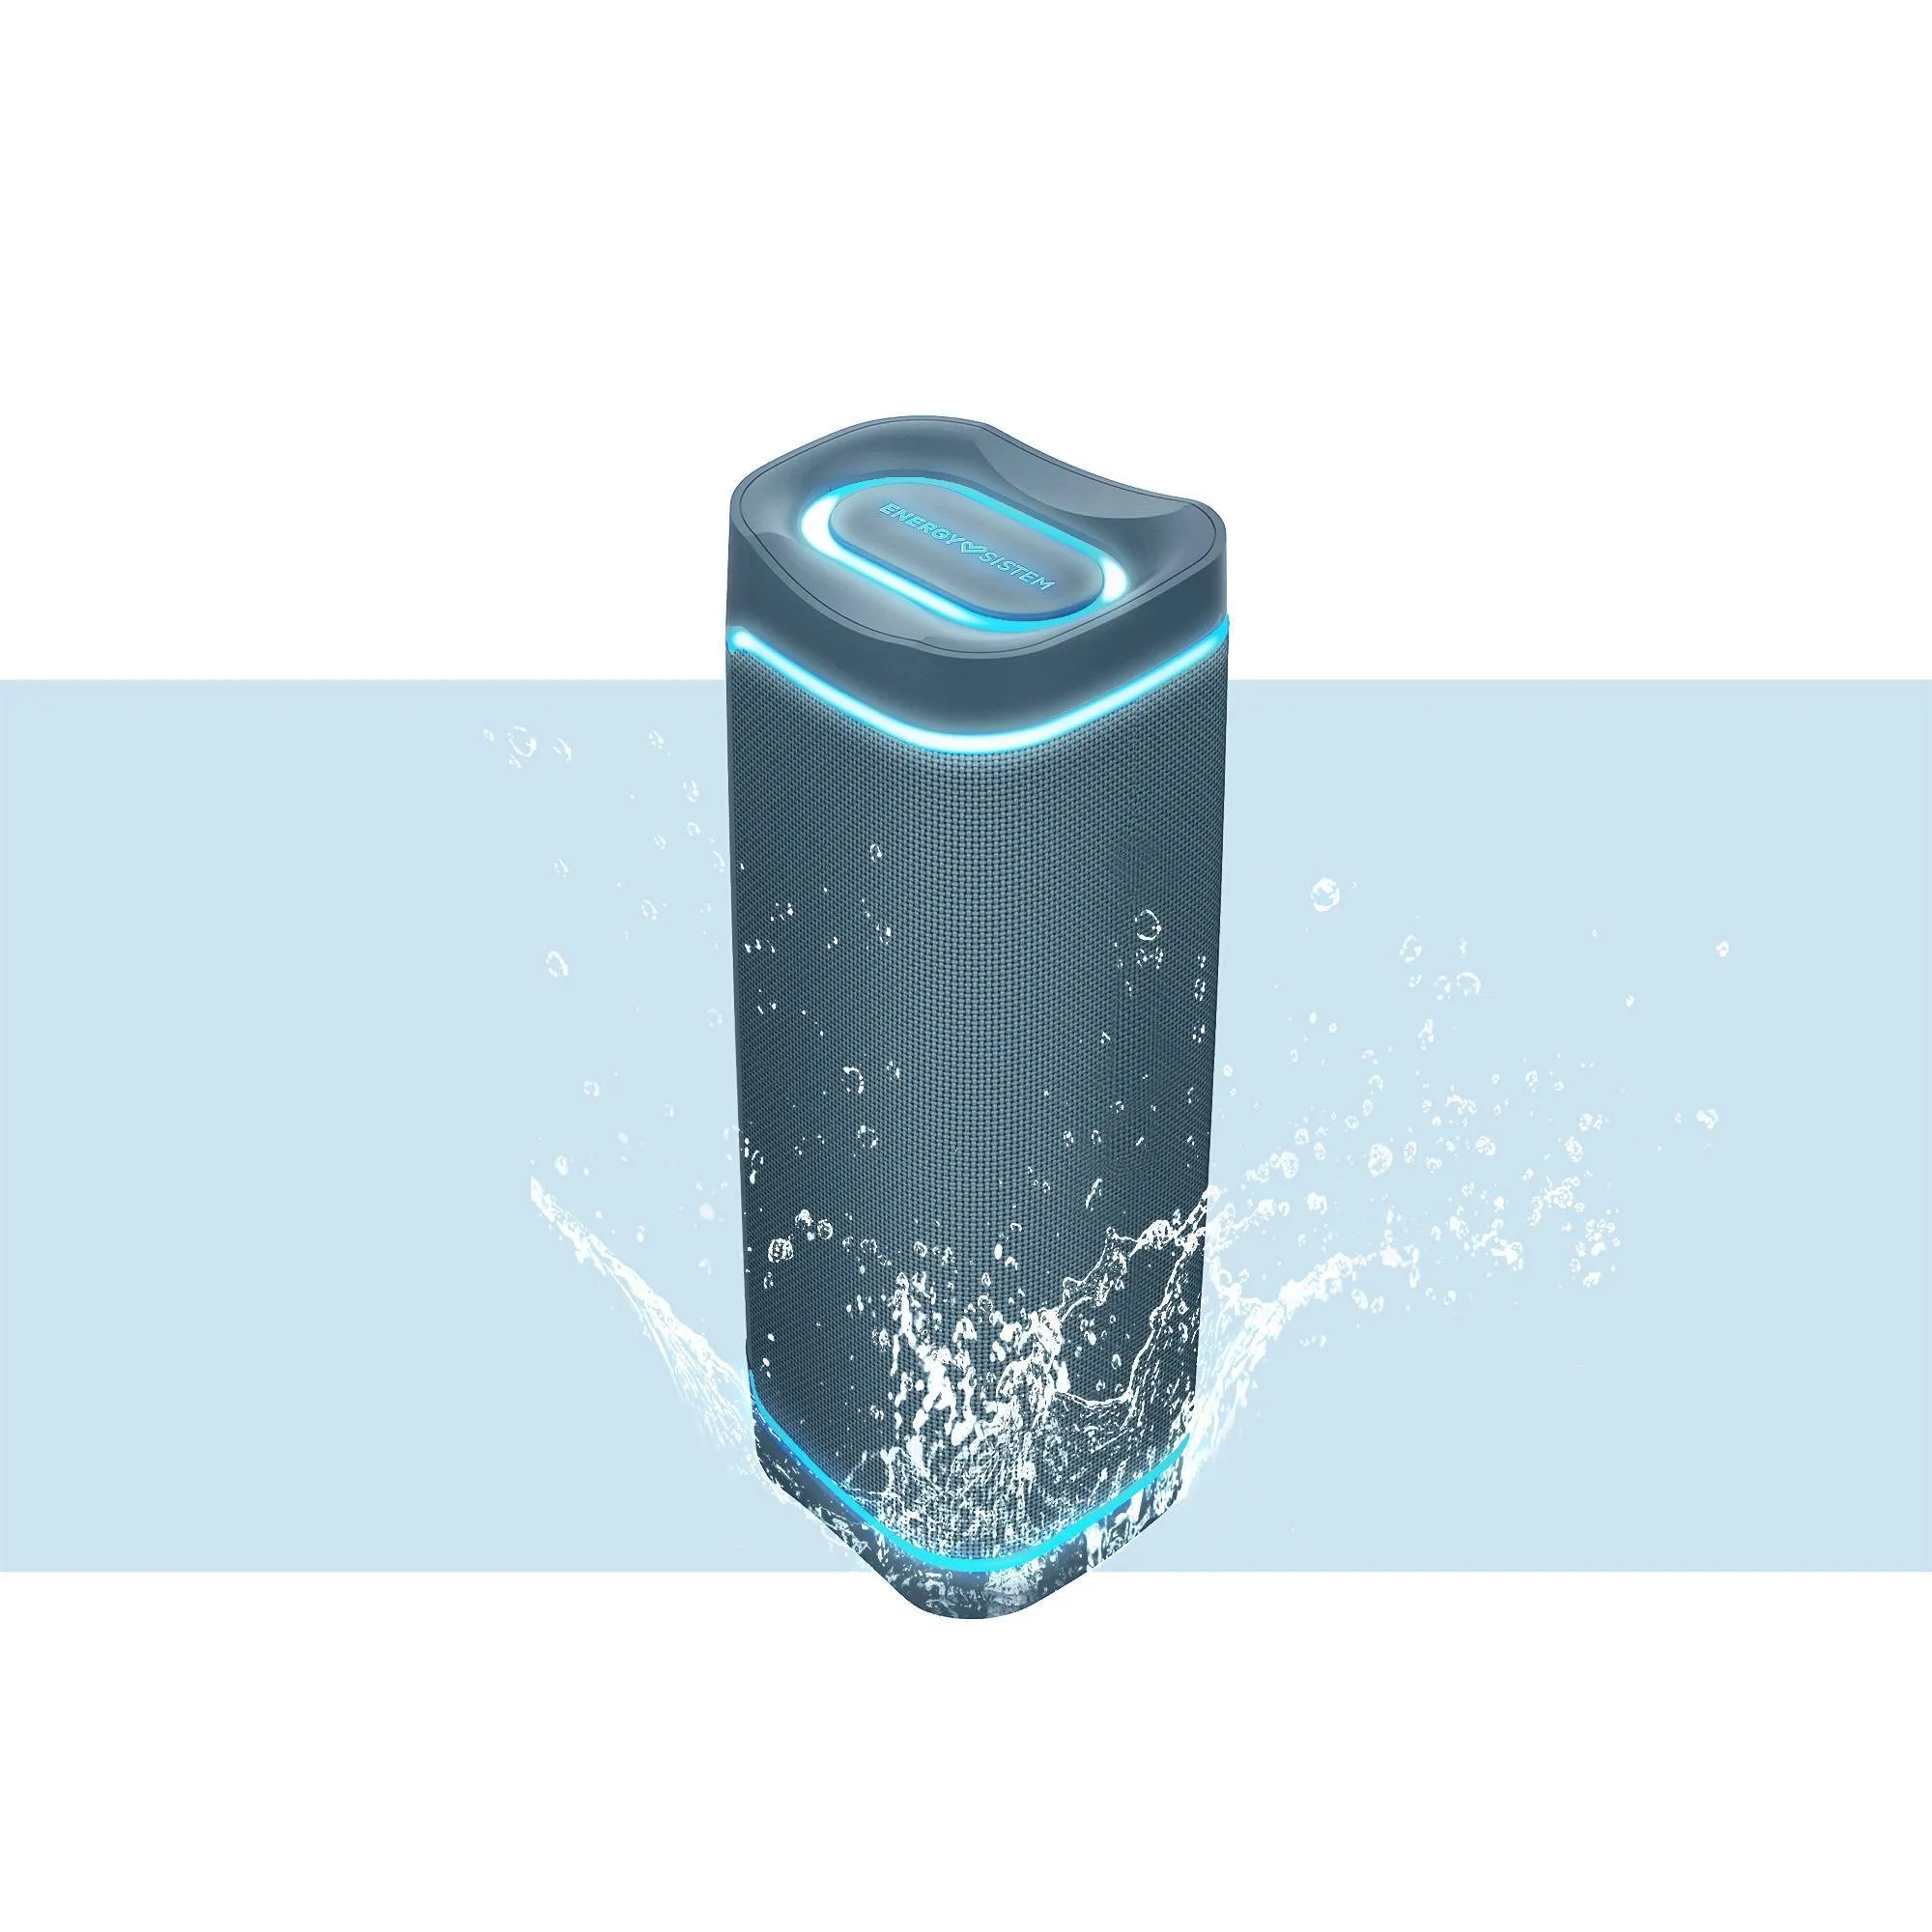 IPX6-certified waterproof and splashproof portable Nami ECO speaker